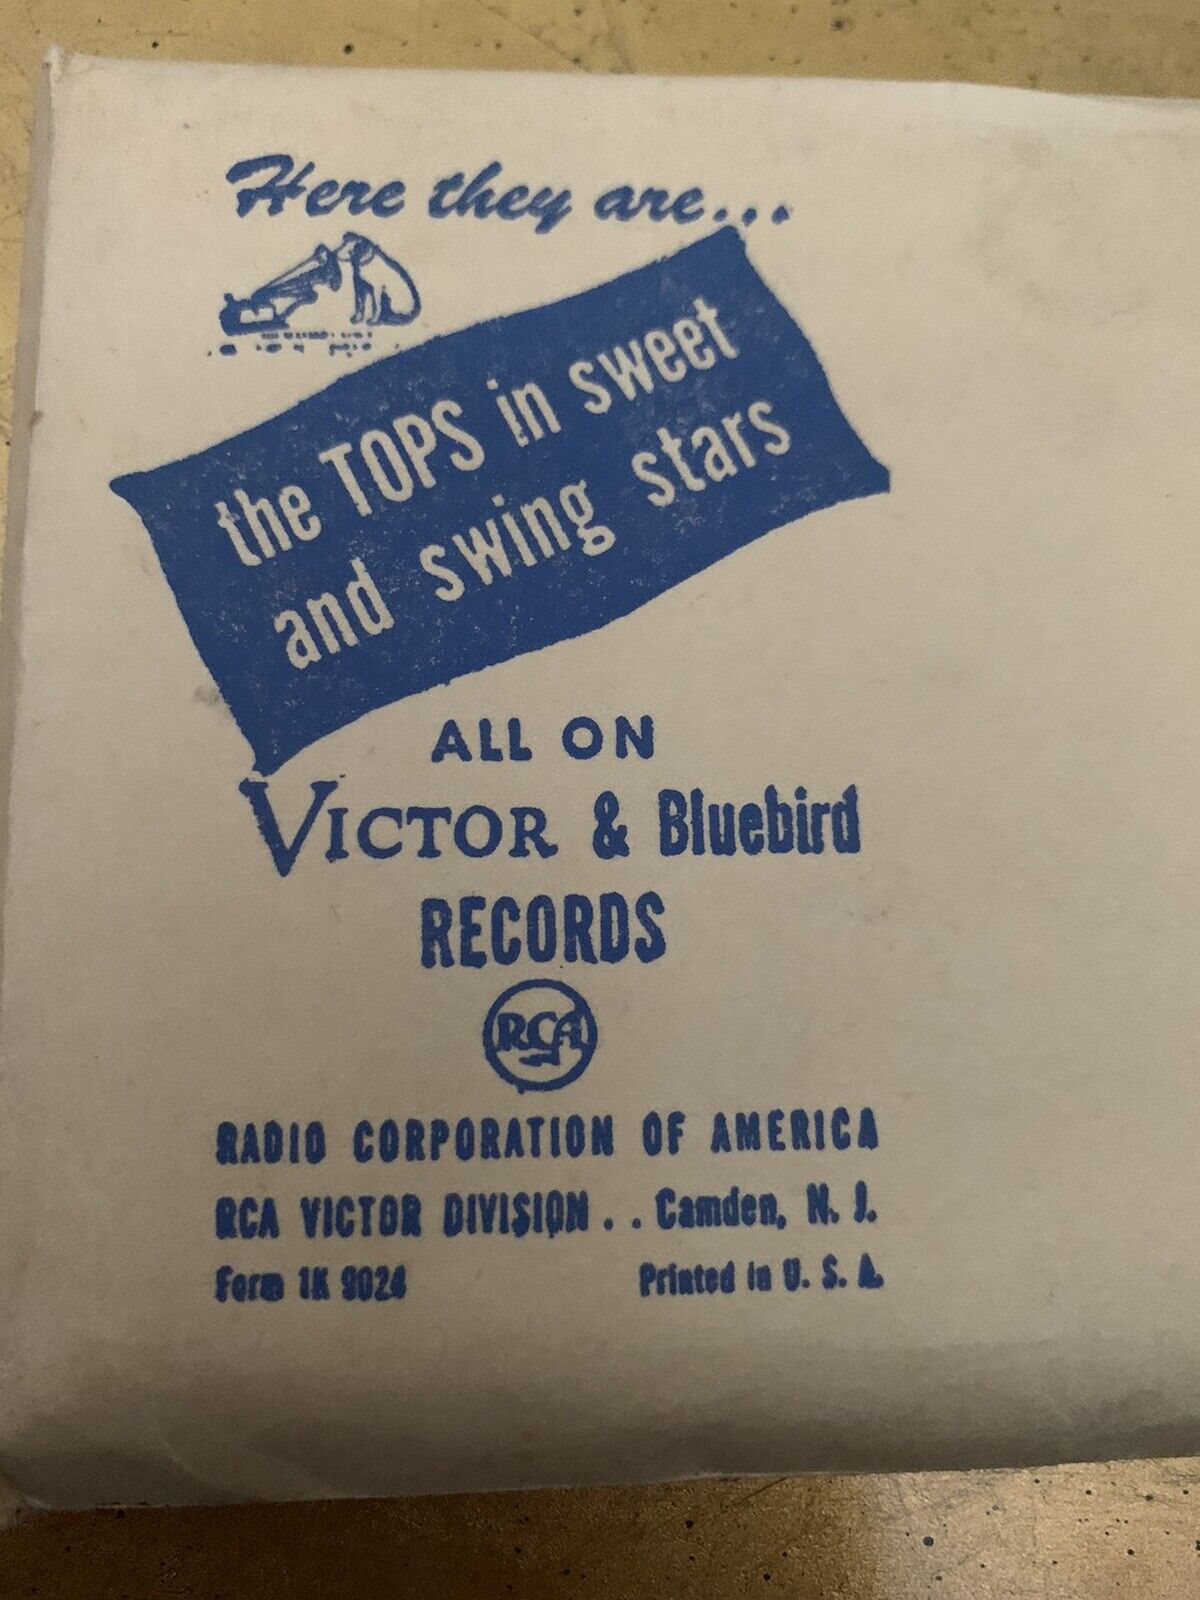 Rca Victor The Tops In Sweet & Swing Stars Postcard Set Of 16 Original Envelope